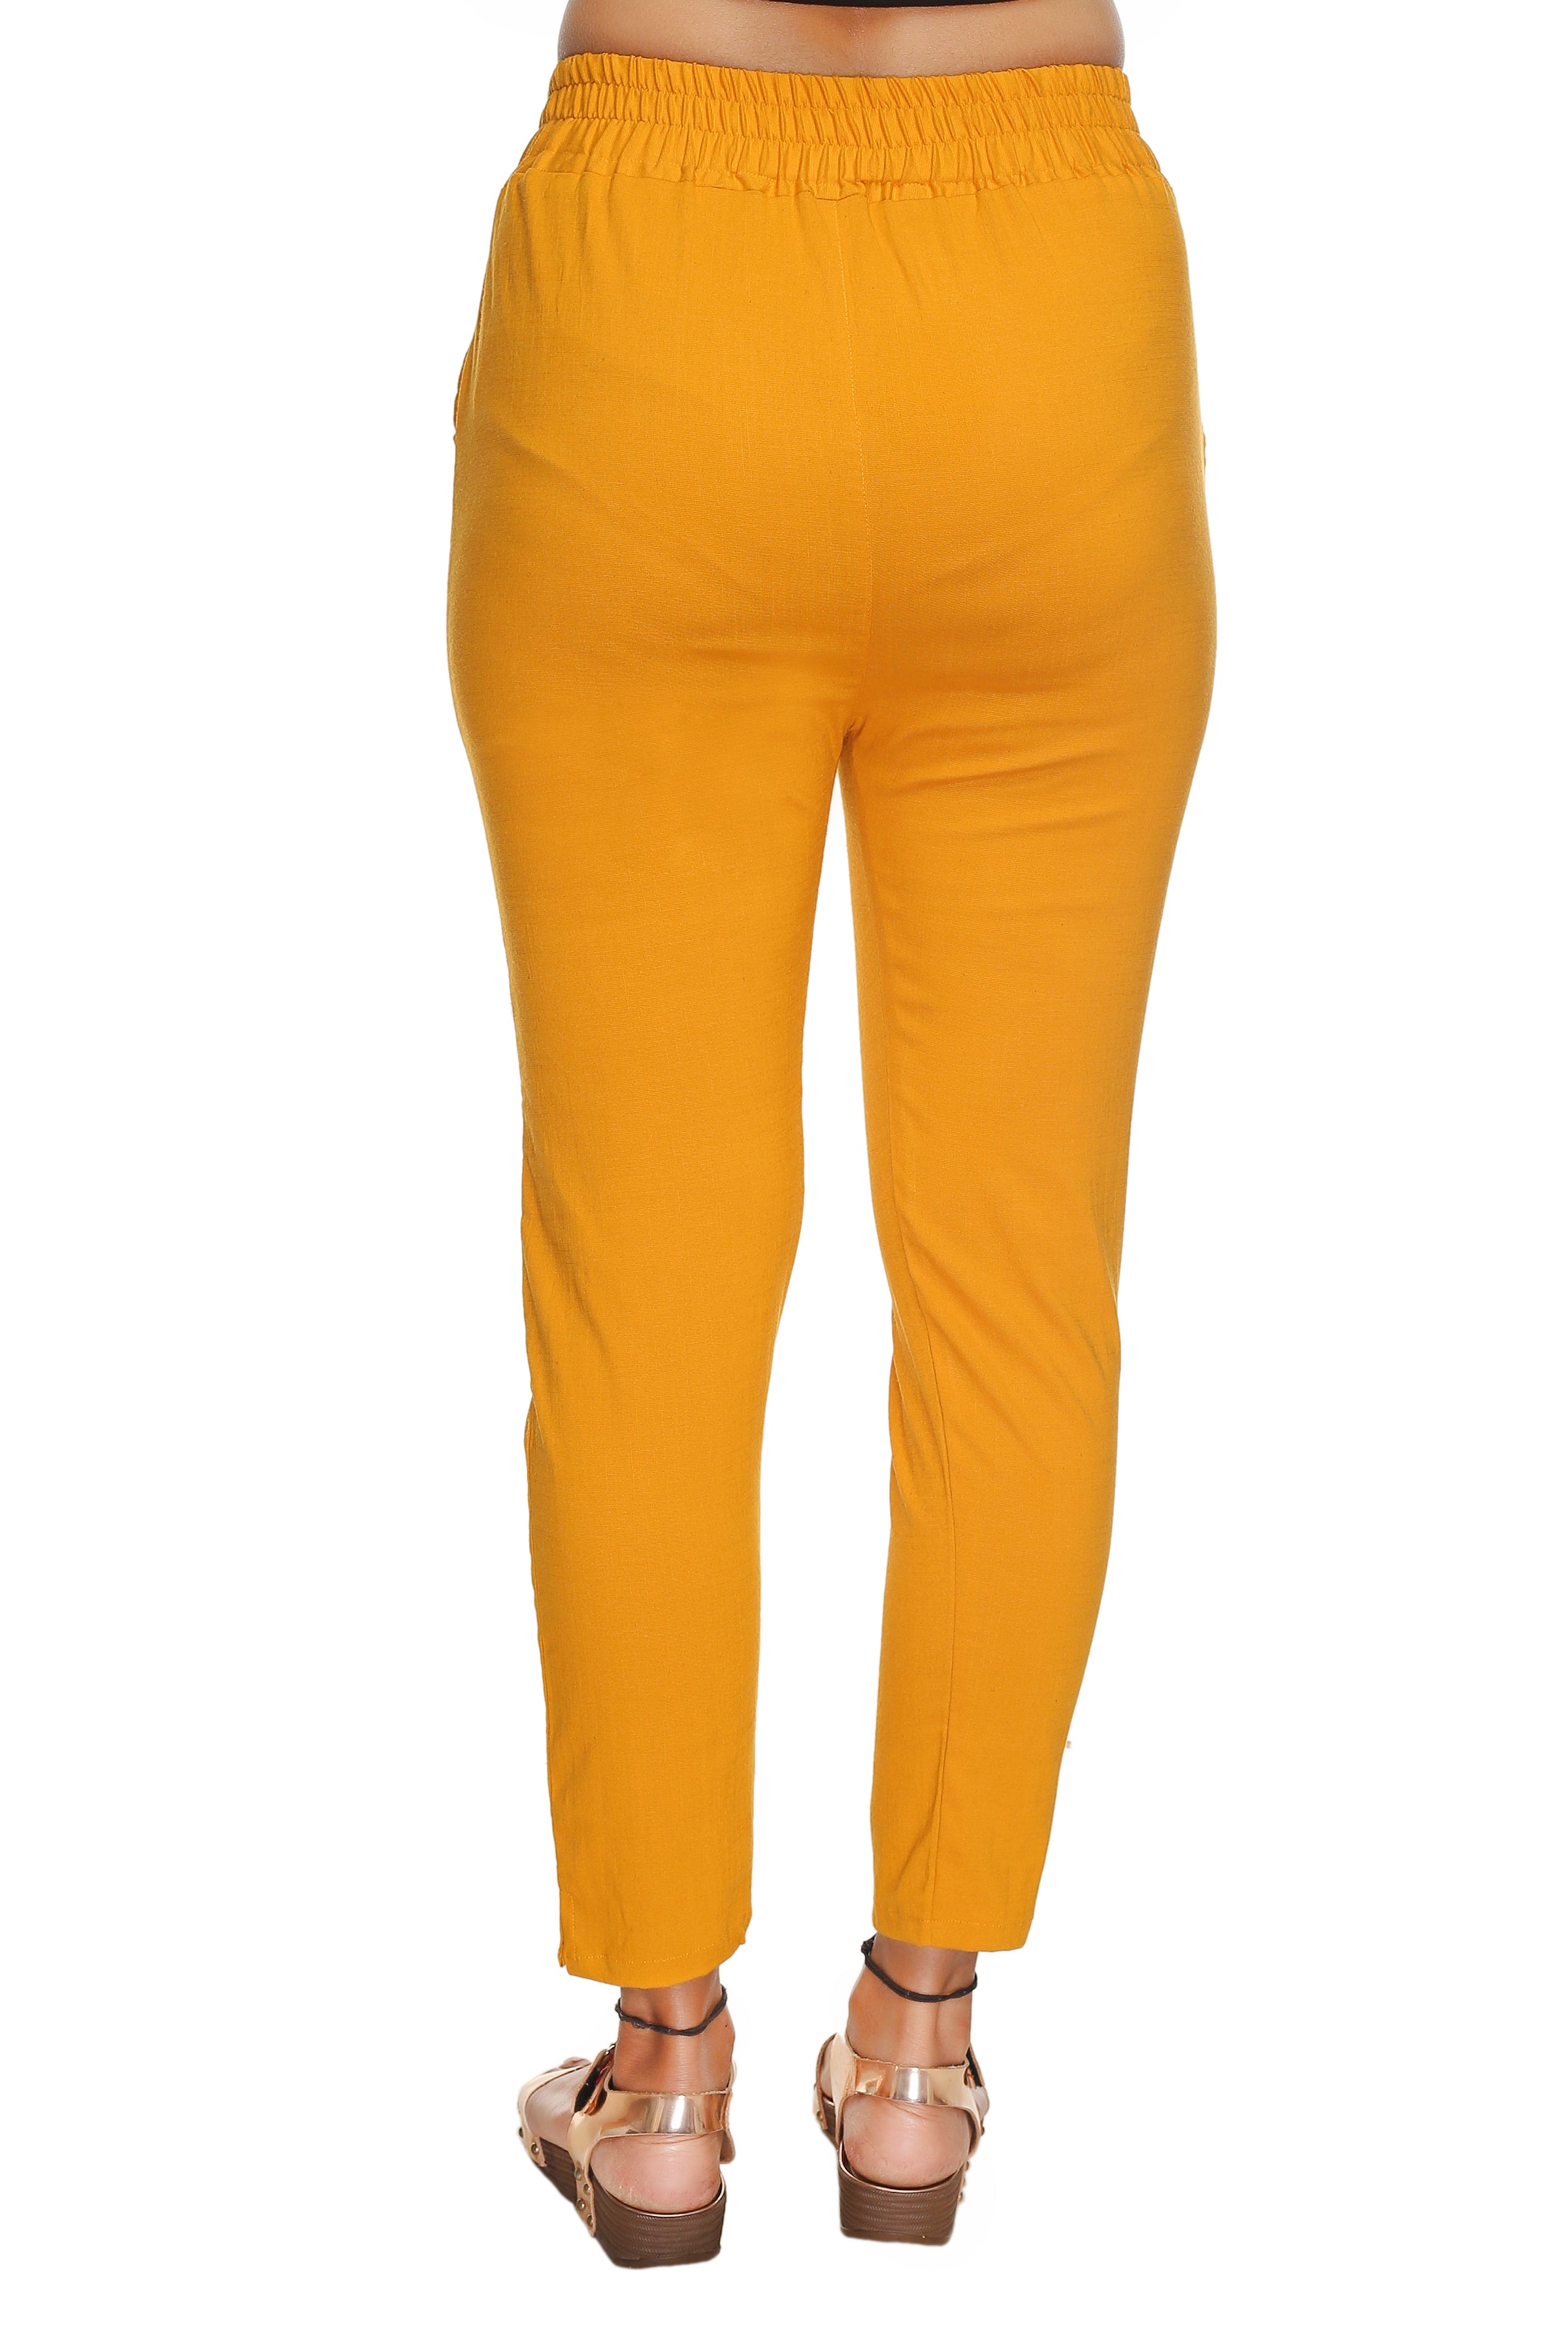 Buy Orange Trousers & Pants for Women by SOJANYA Online | Ajio.com